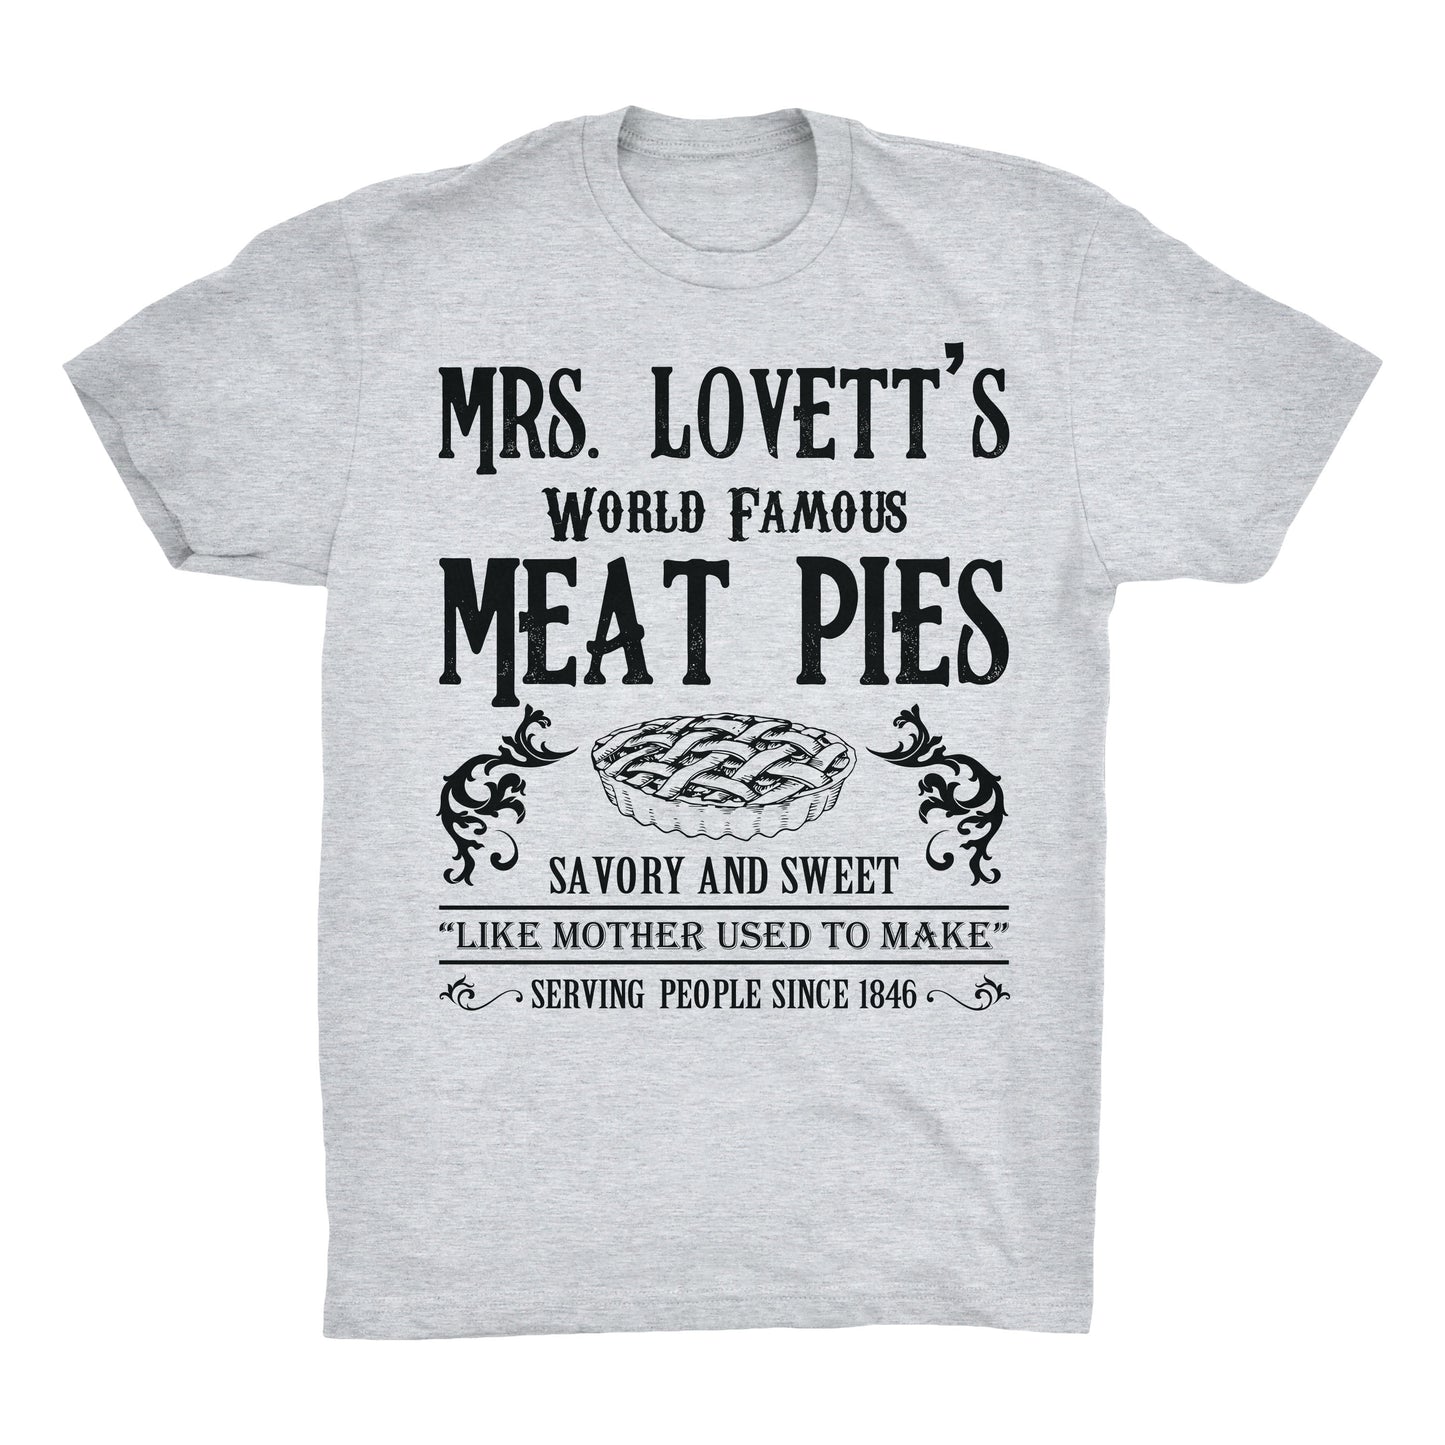 Mrs. Lovett's World Famous Meat Pies T-Shirt On Black, Or Gray - 100% Soft Premium Cotton T-Shirt 